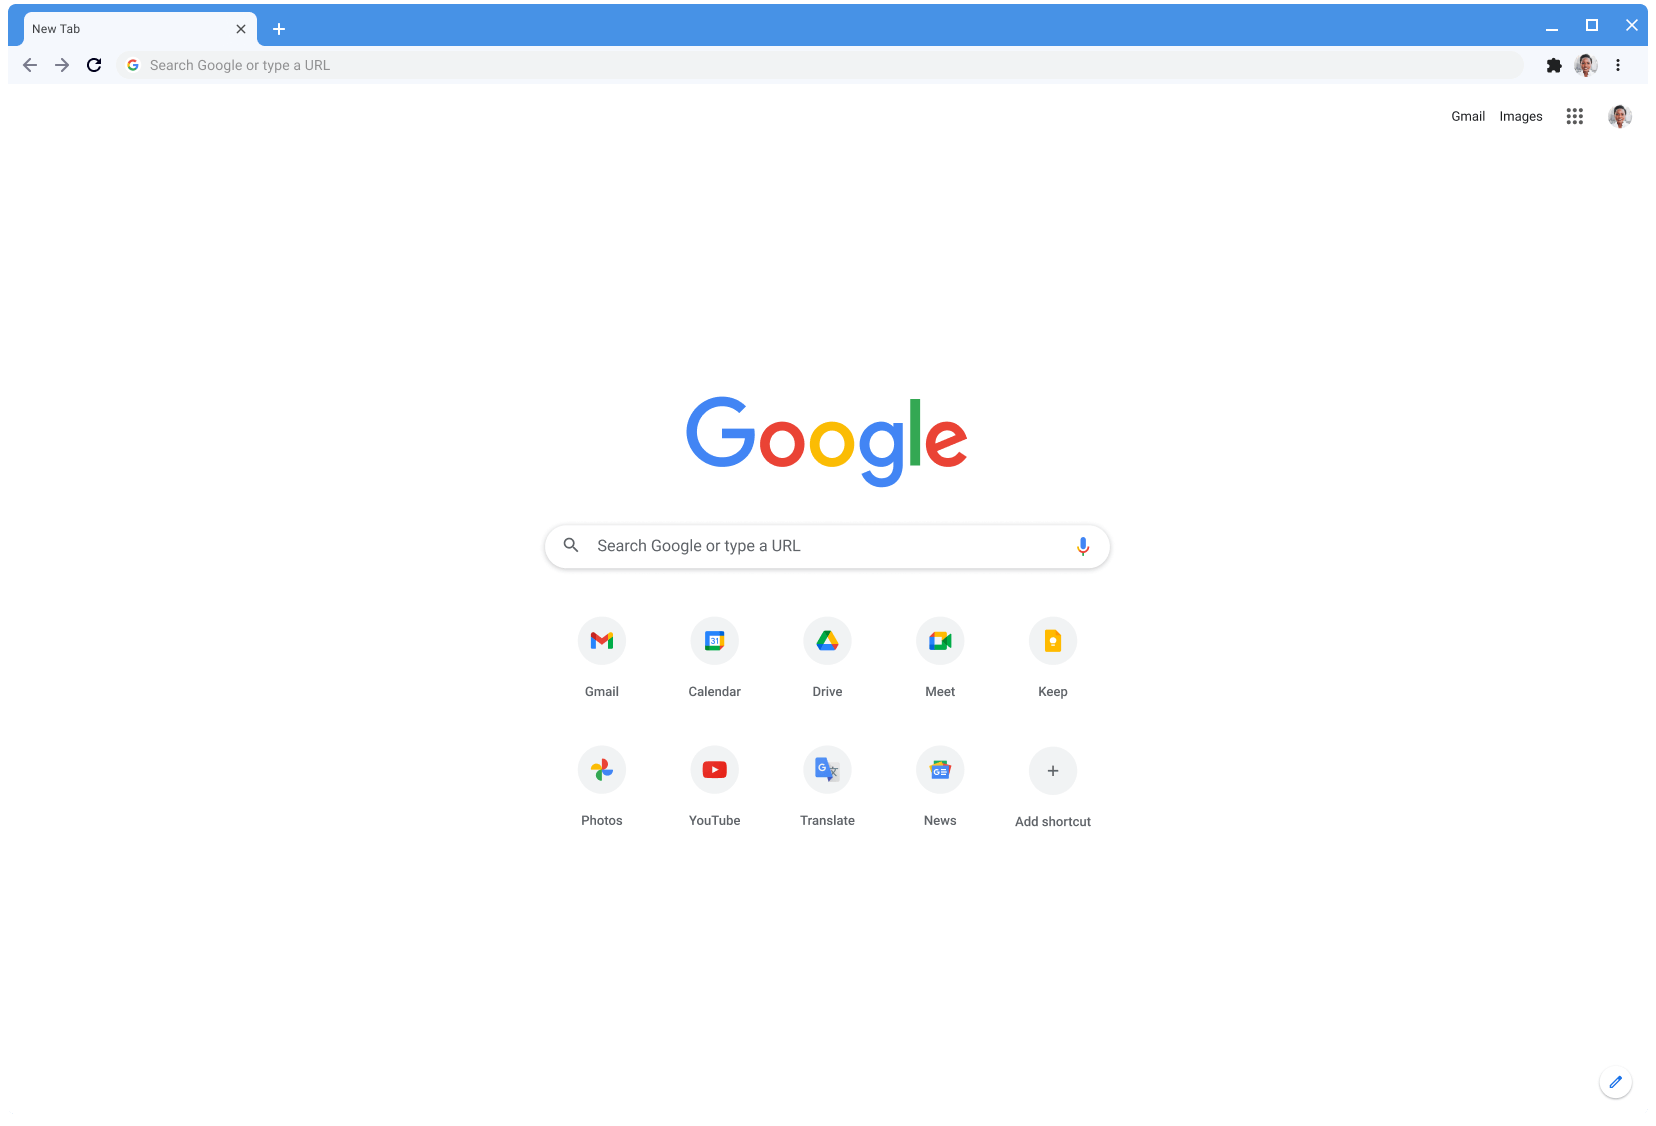 Chrome browser window displaying Google.com, using the Classic theme.